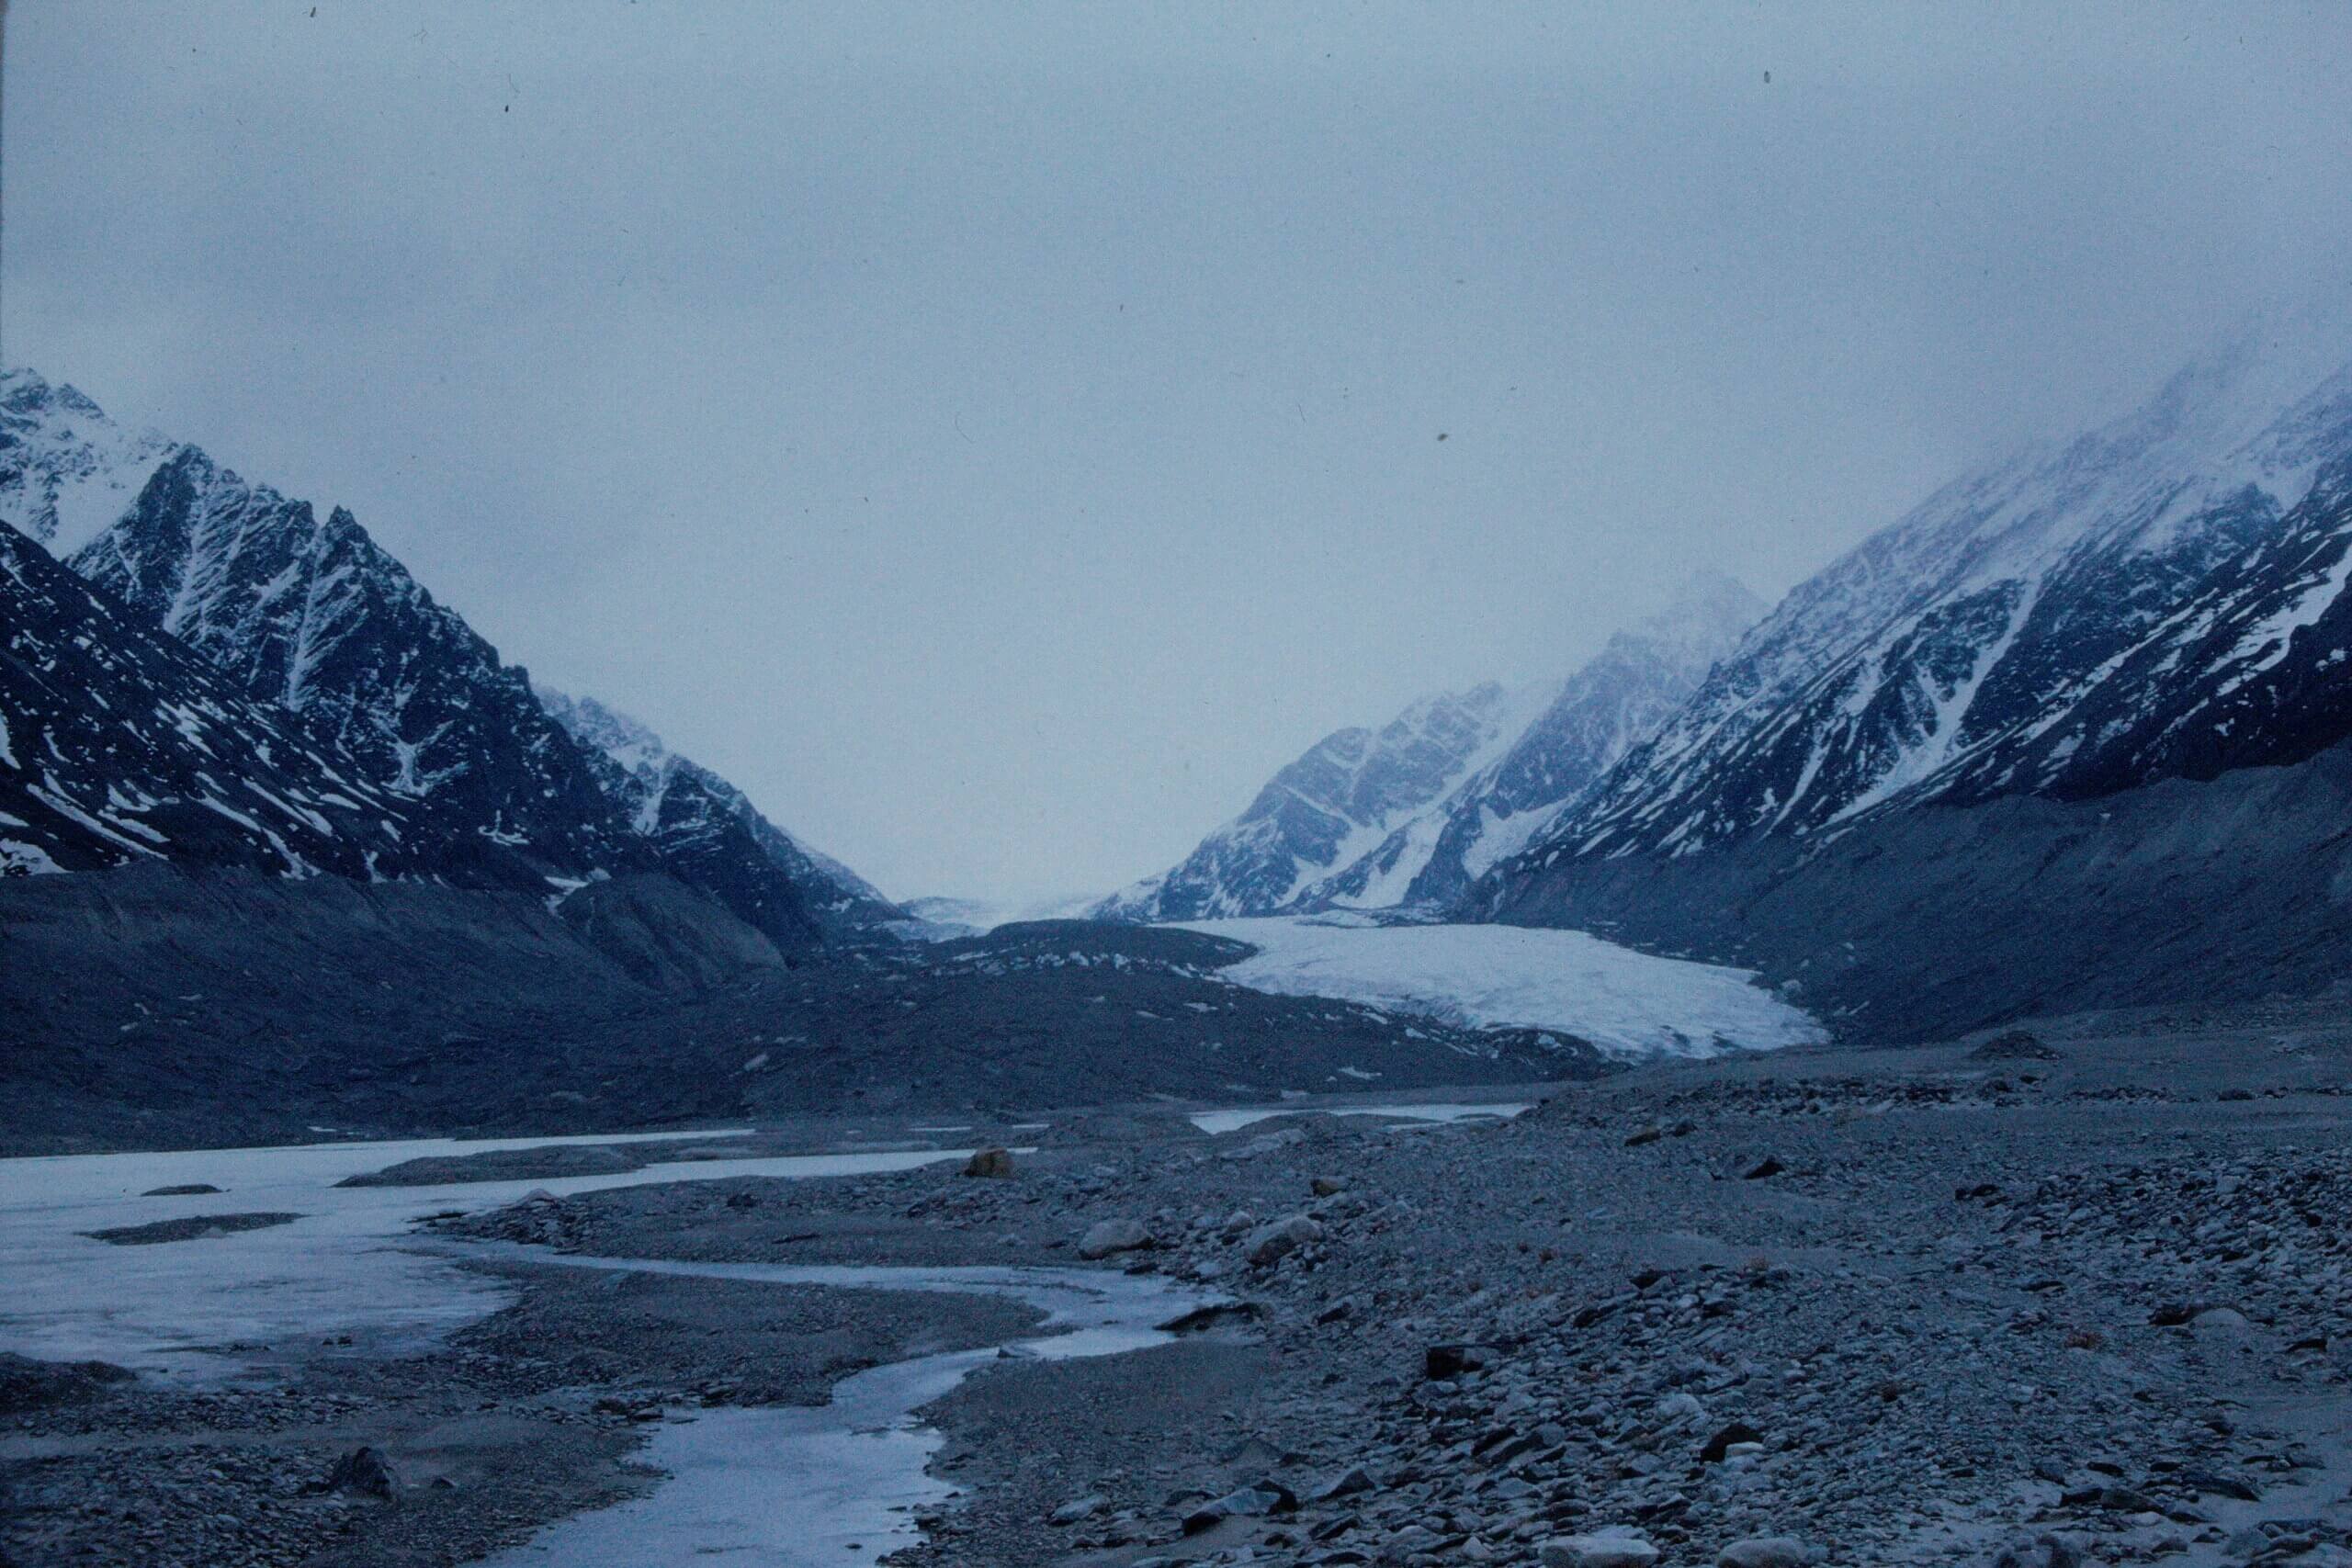 Gerstle Glacier - 1969